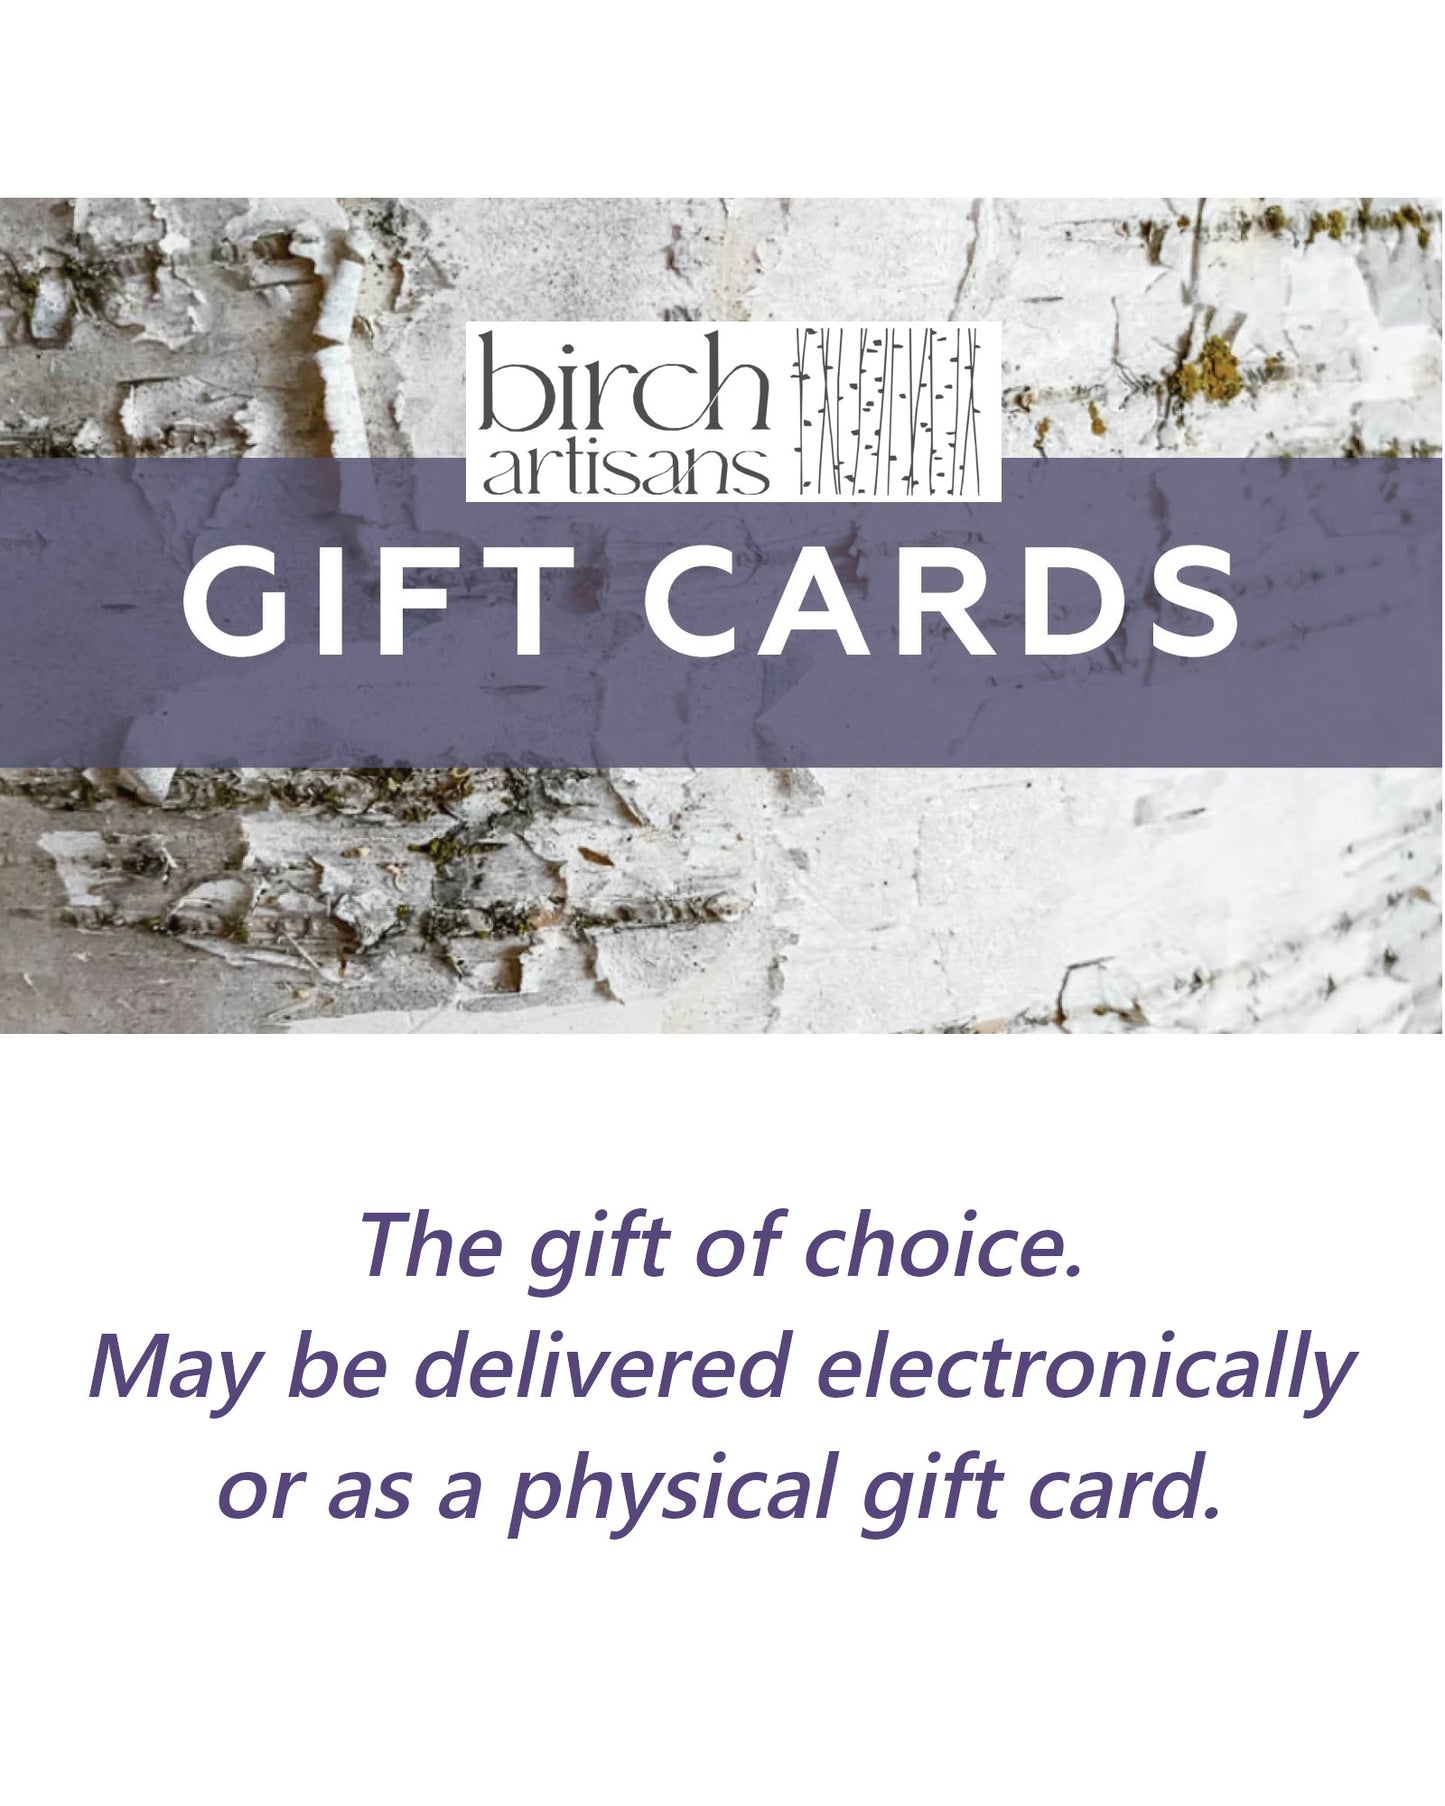 Birch Artisans Gift Cards